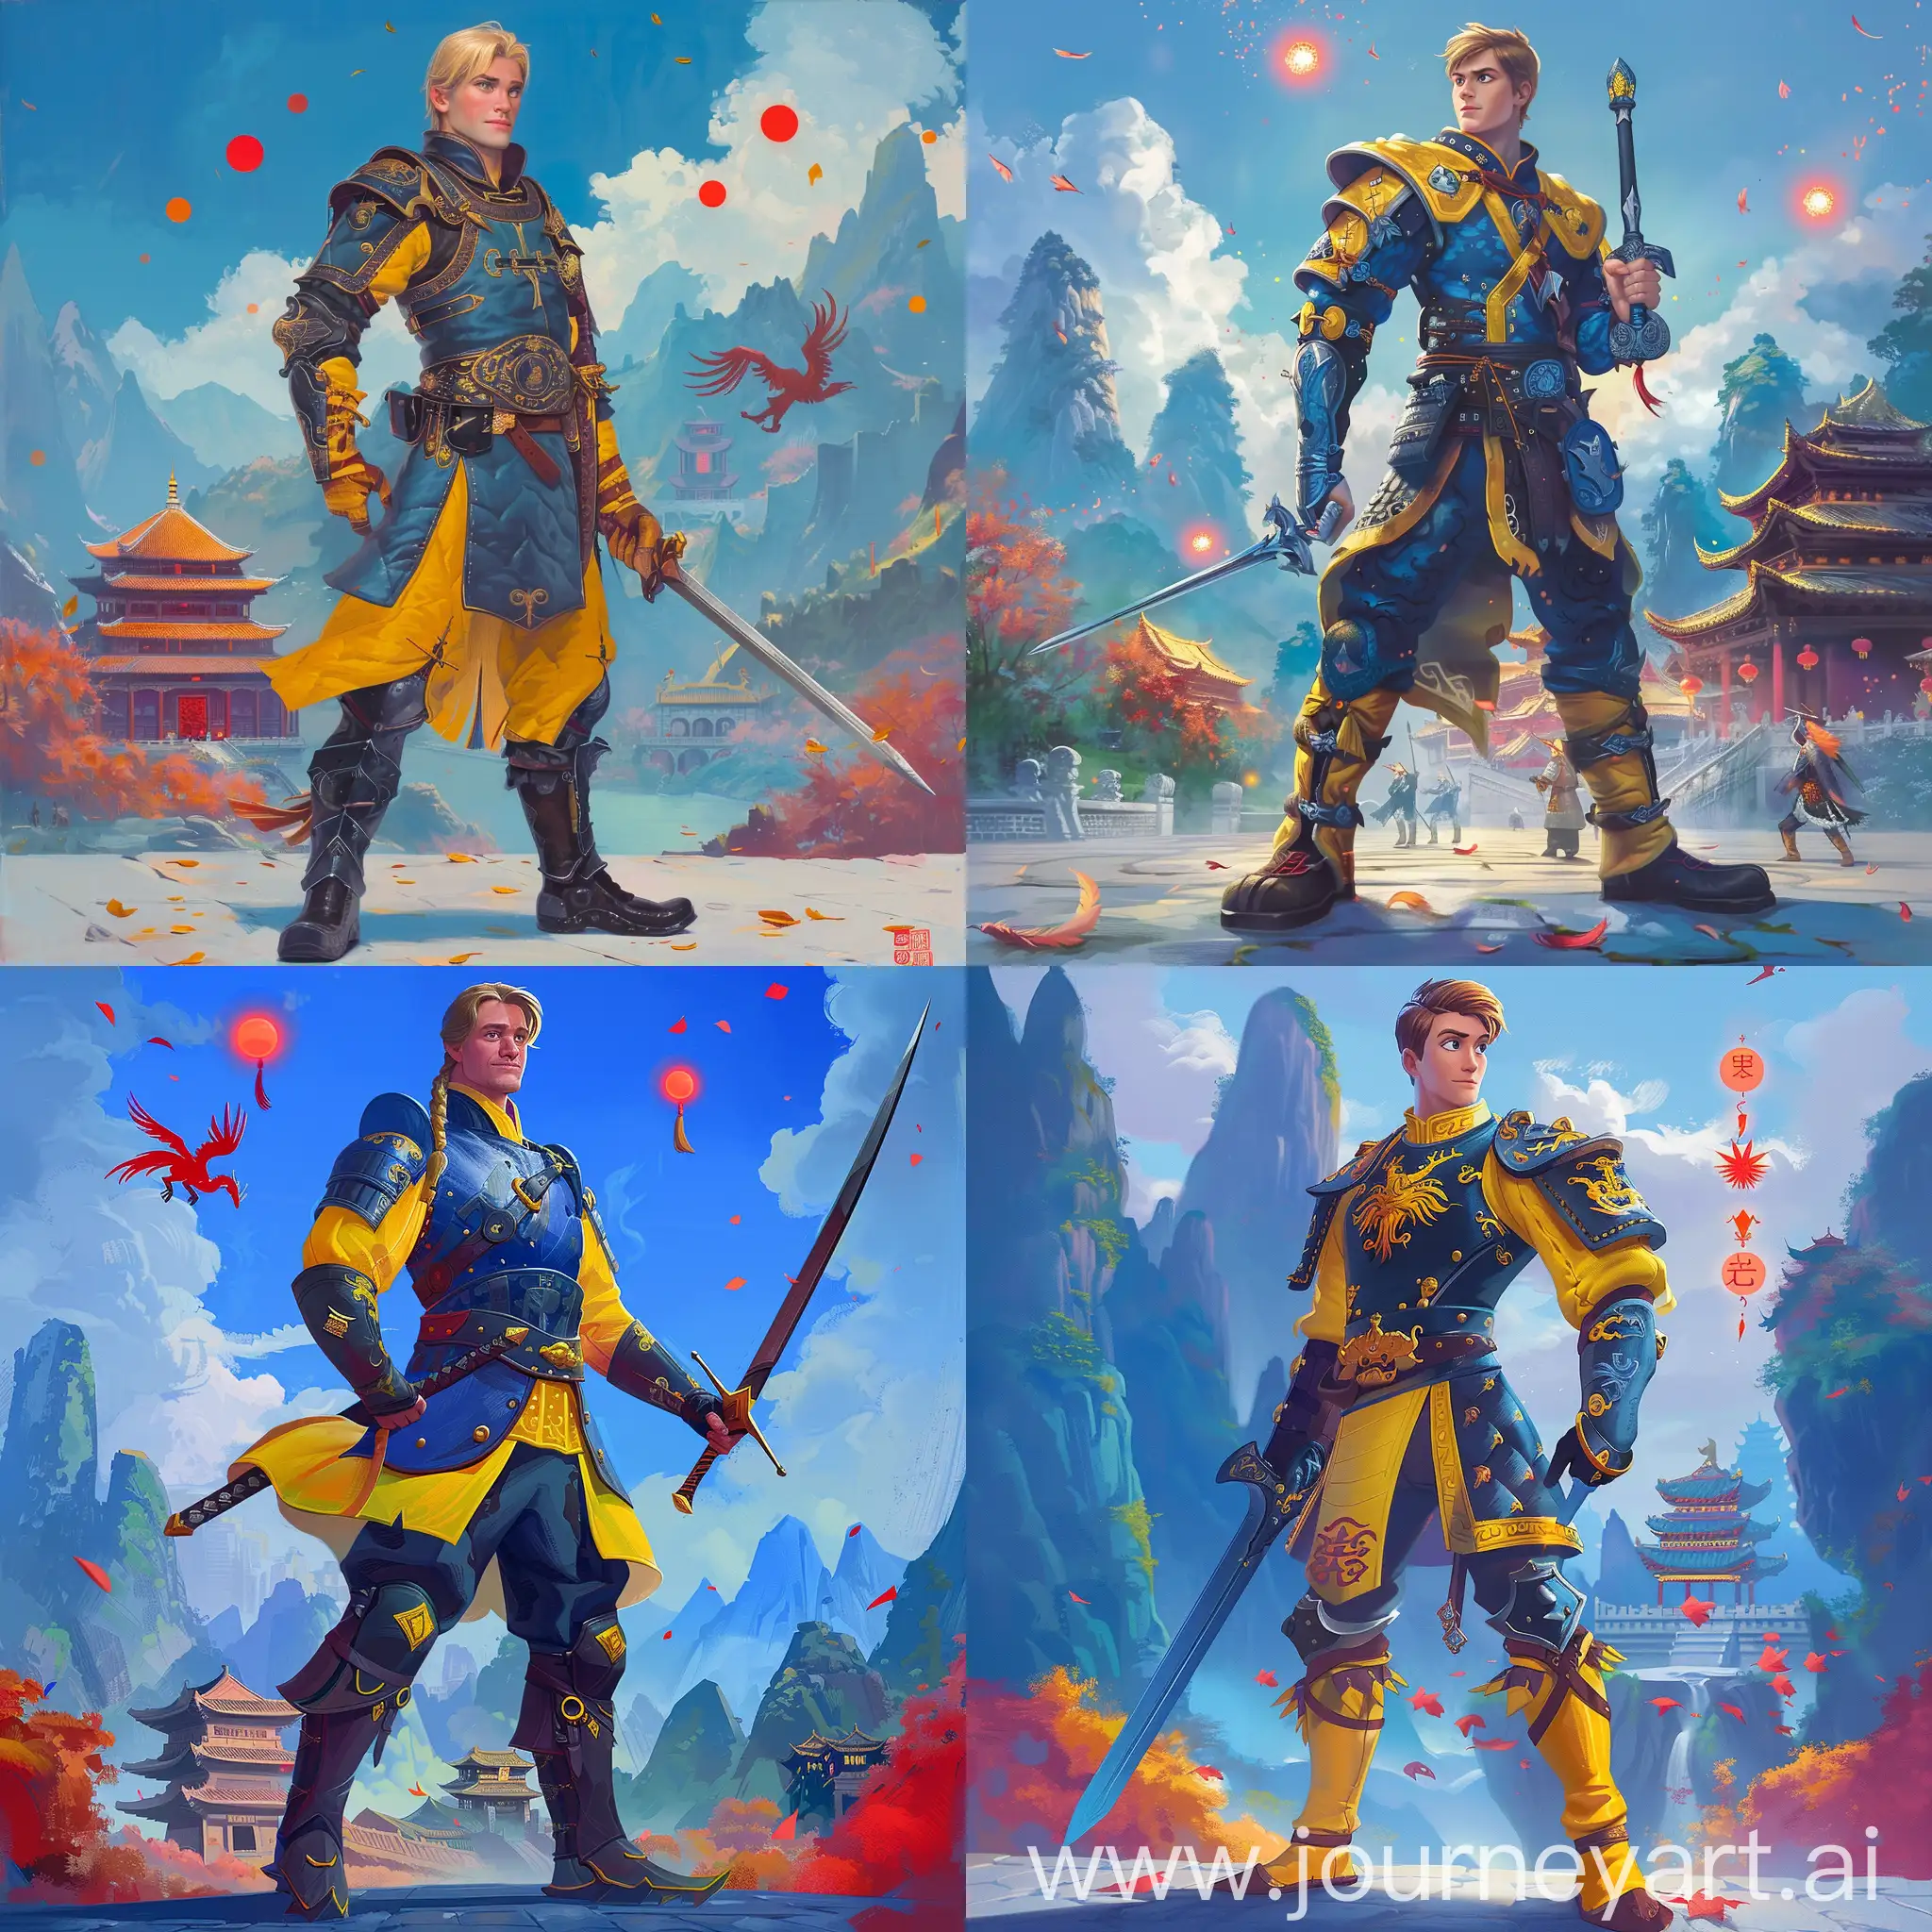 Disney-Norwegian-Prince-Kristoff-Bjorgman-in-Chinese-Medieval-Armor-with-Sword